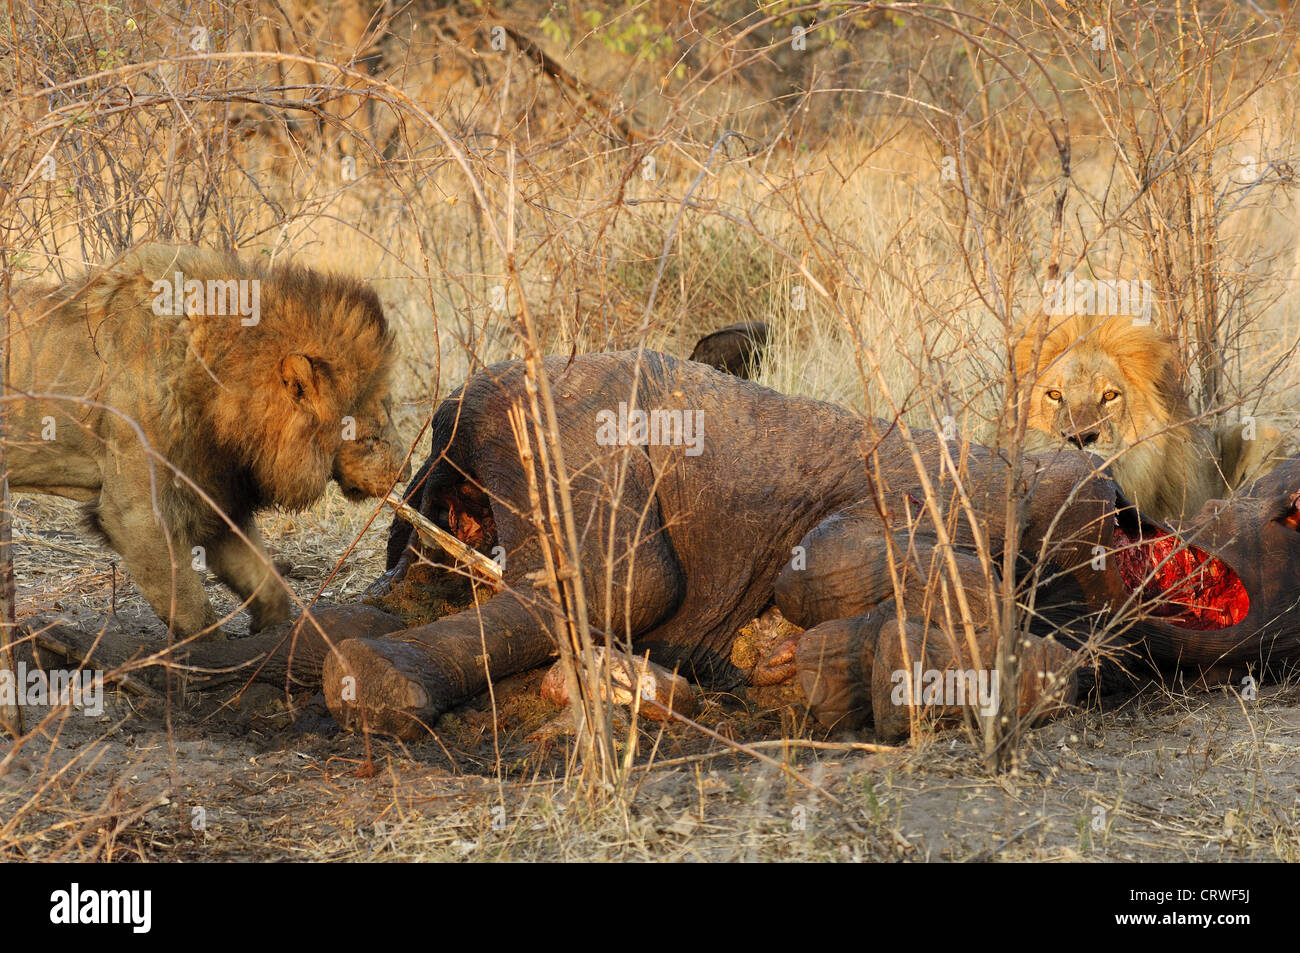 Male lion eating a killed elephant Stock Photo